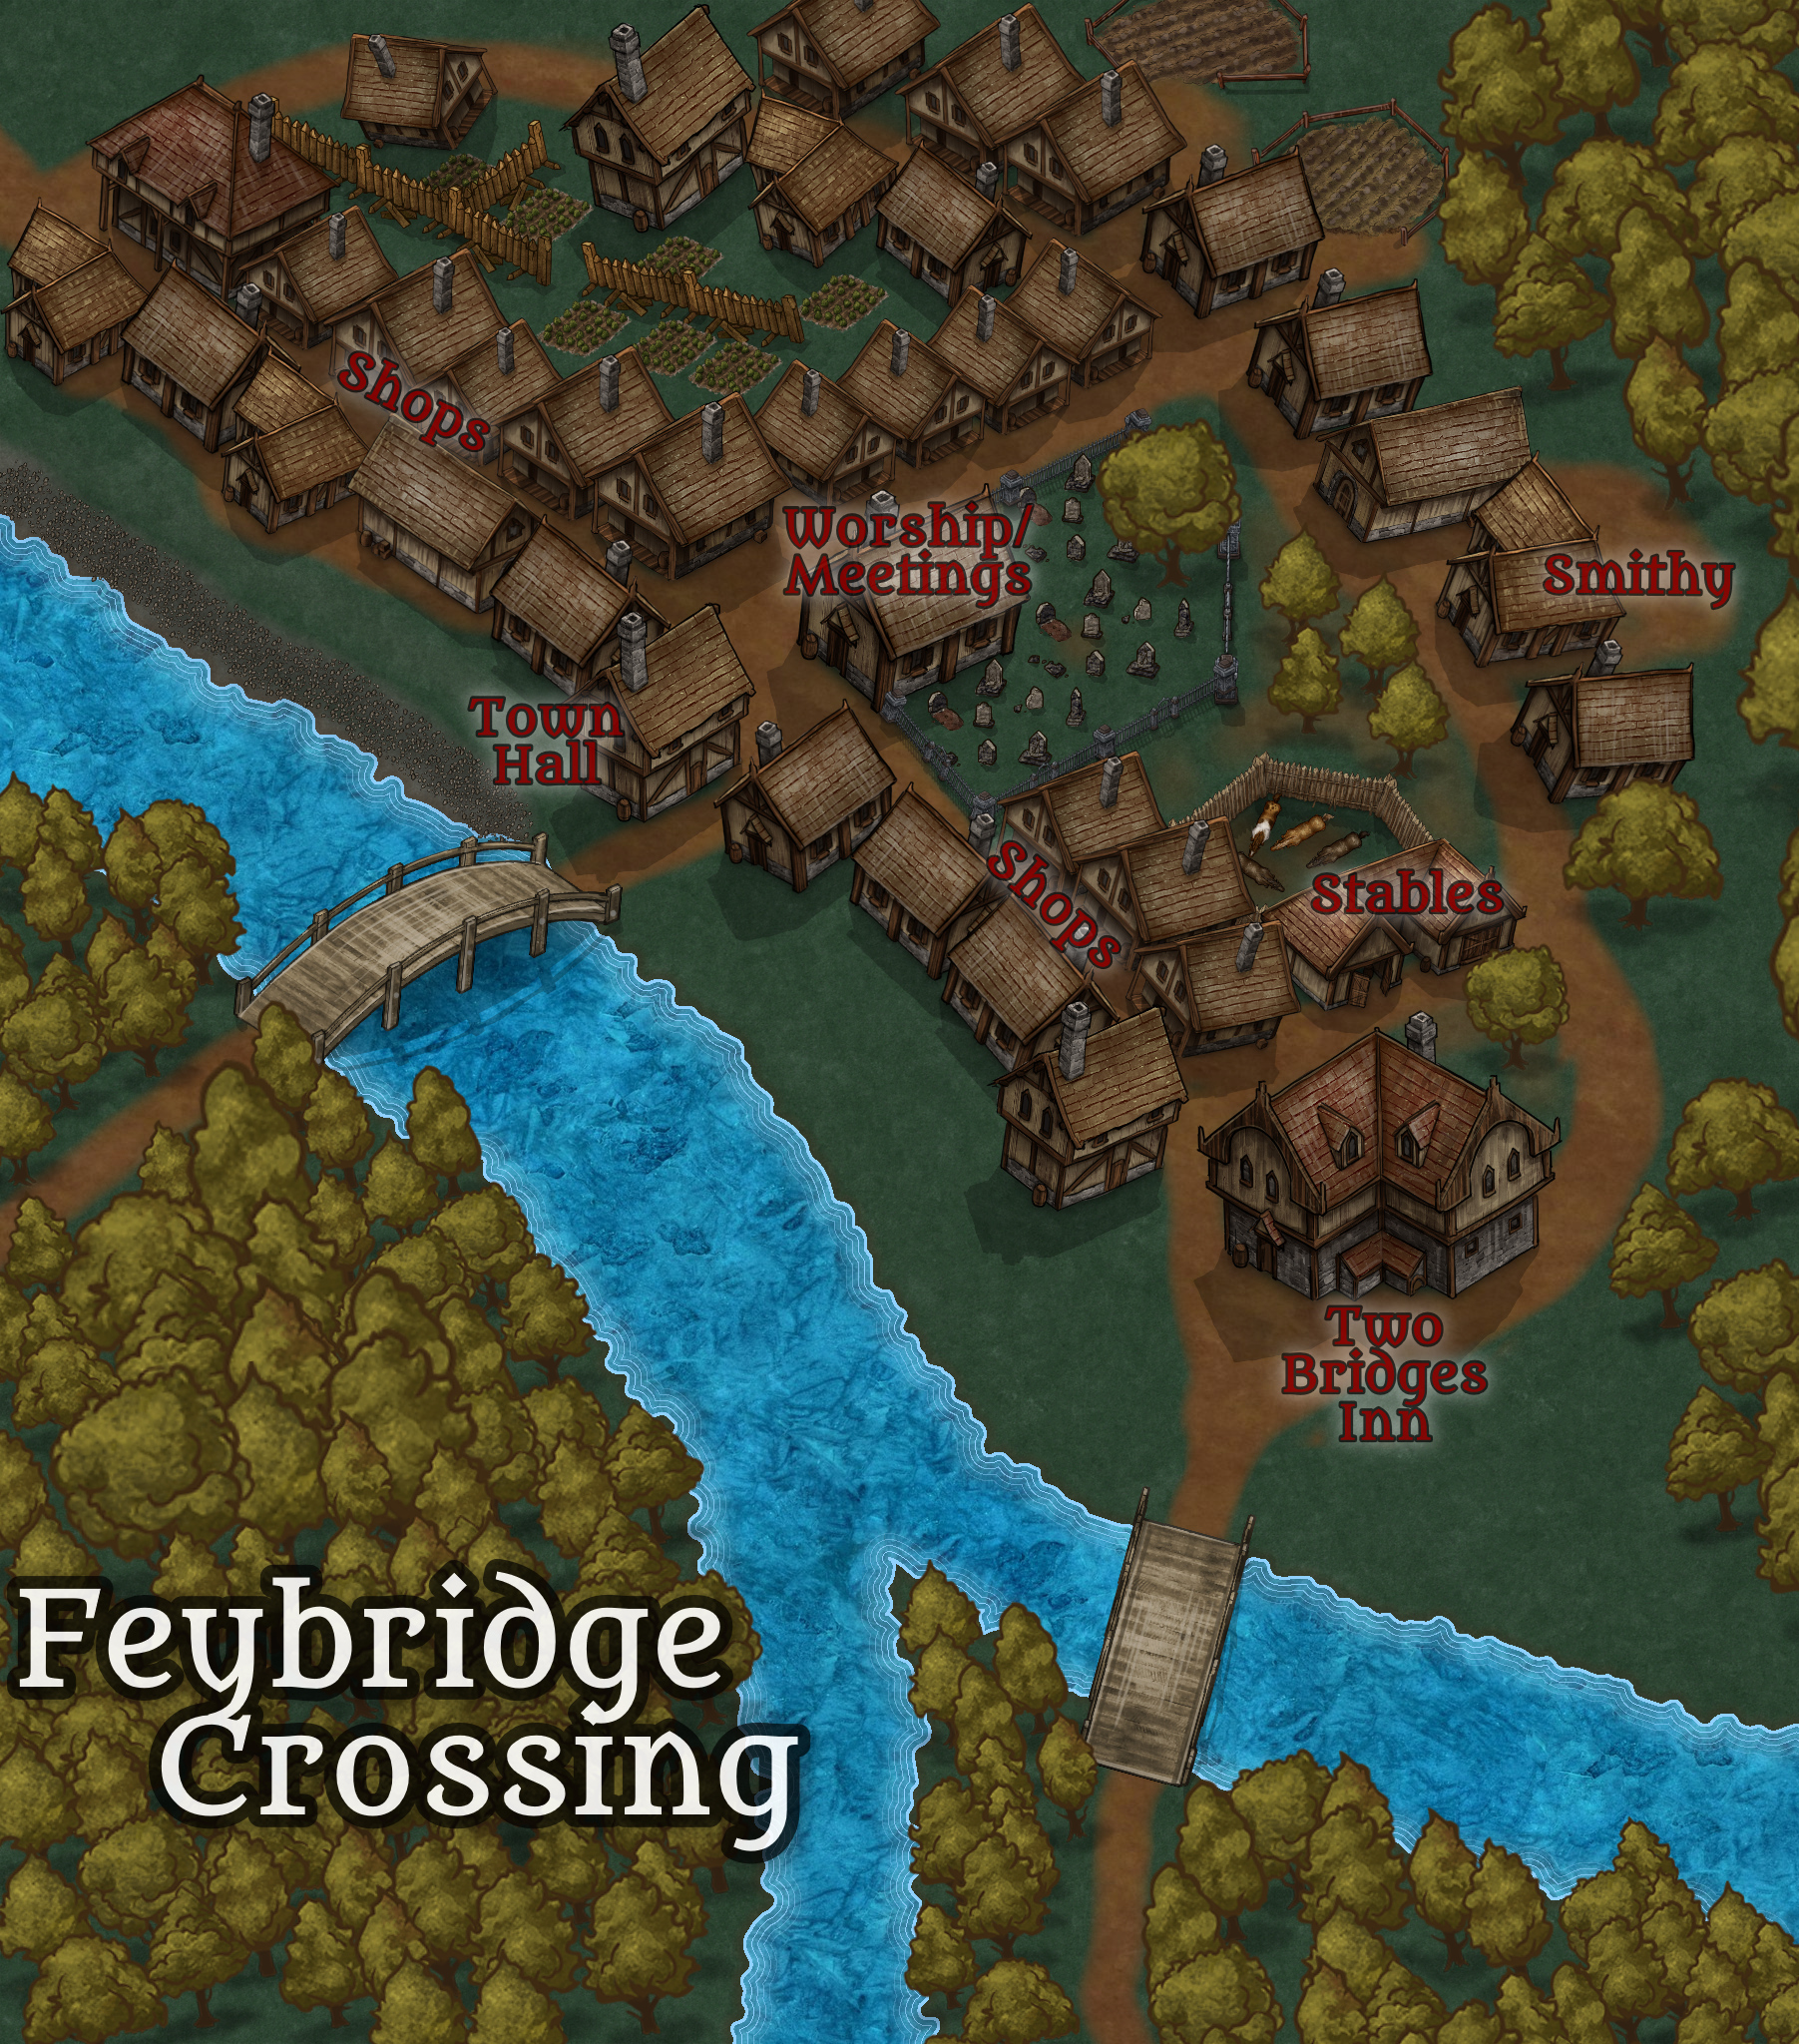 The Village of Feybridge Crossing cover